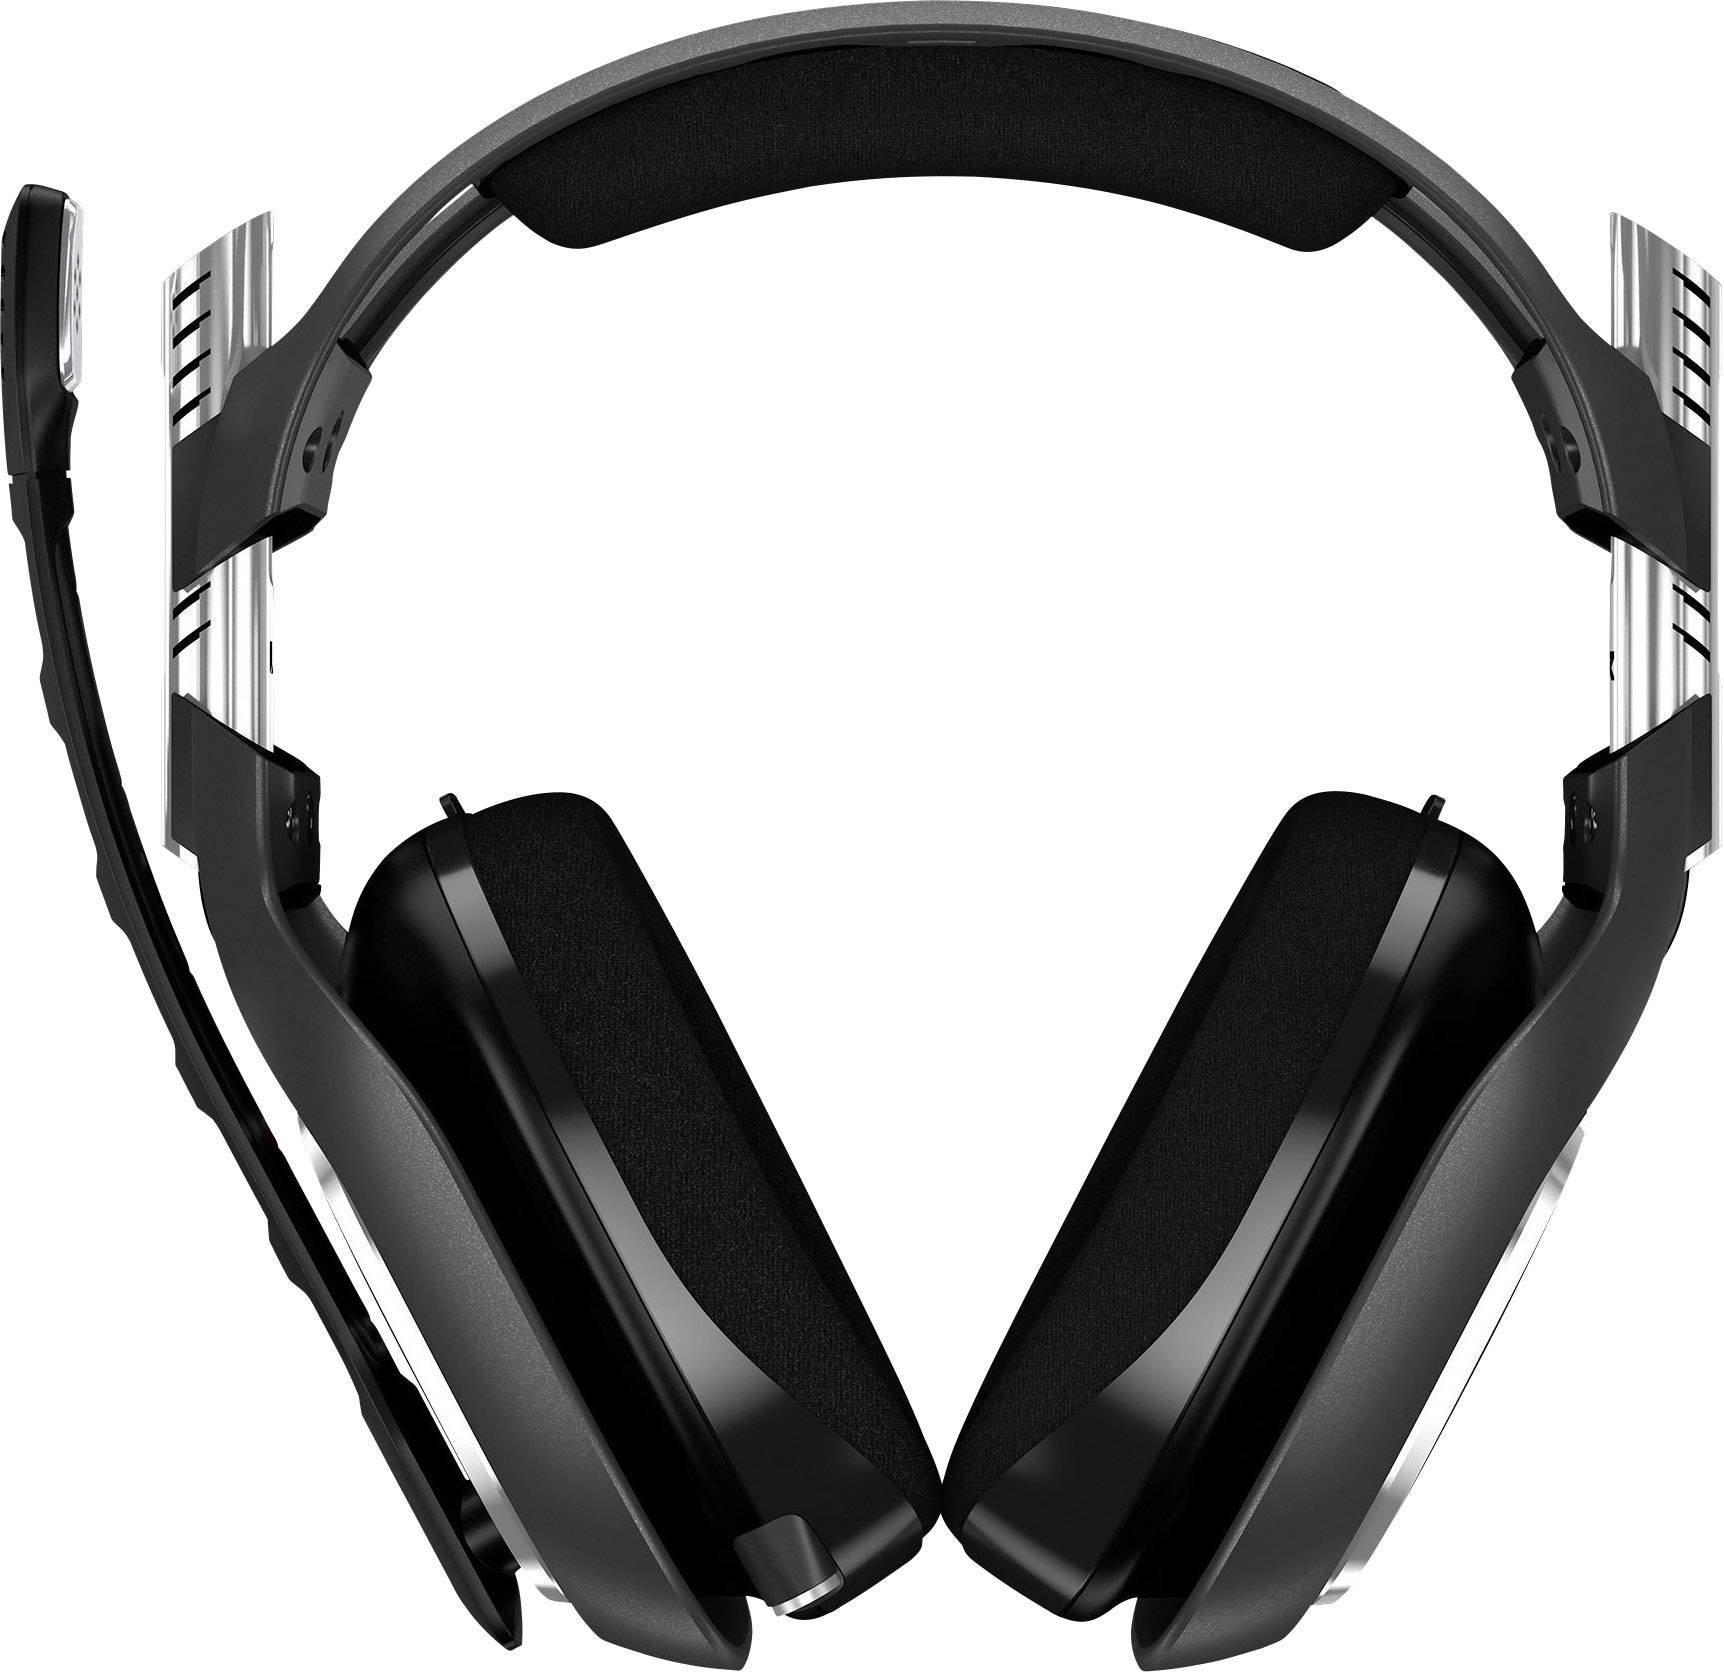 Astro 0 Tr Headset Mixamp Pro Tr Ps4 Extra Saudi